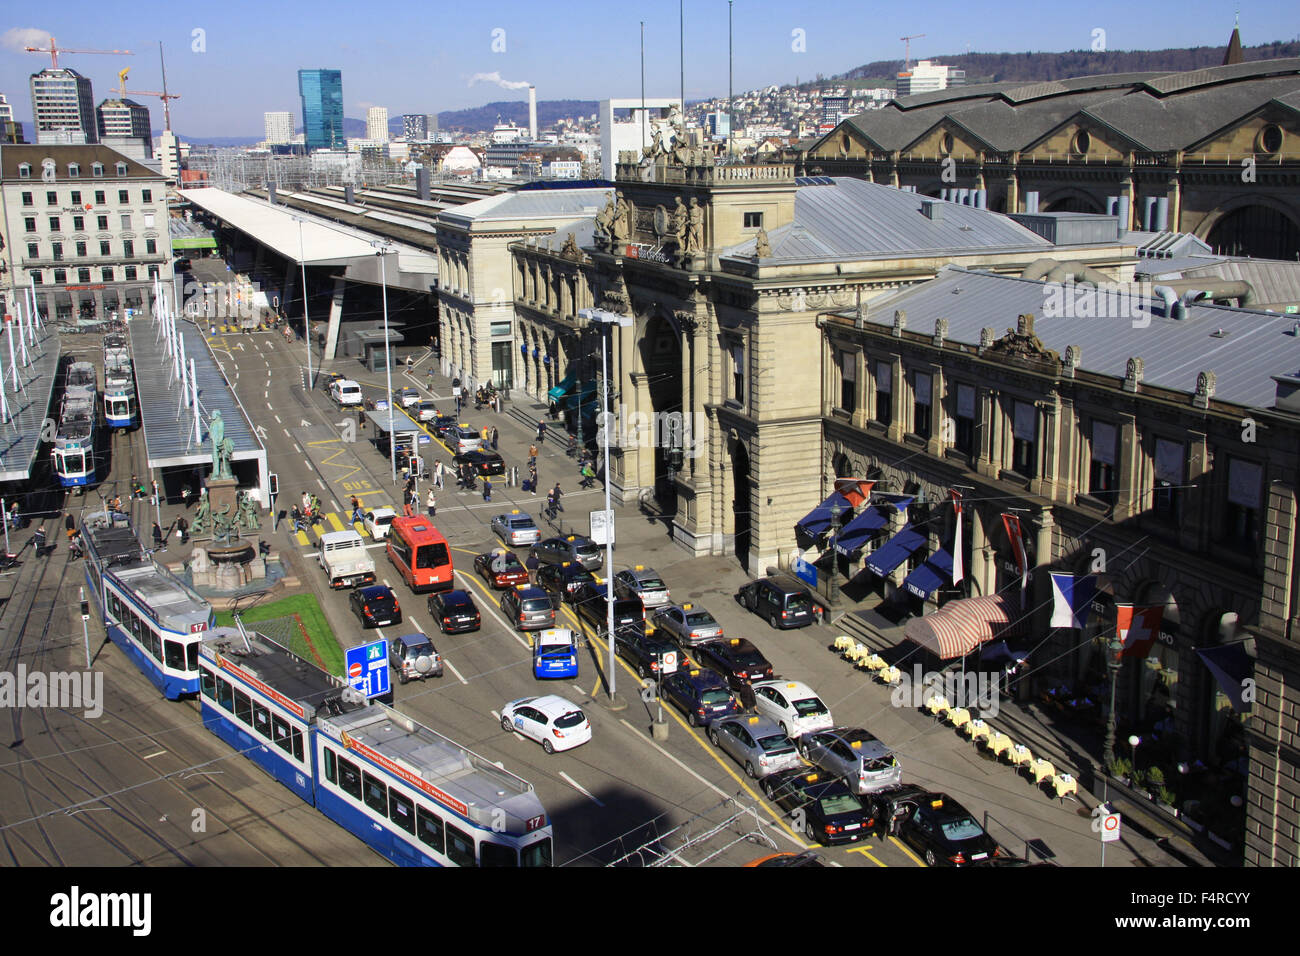 Zurigo, Svizzera, Europa, Bahnhofplatz, stazione centrale, stazione ferroviaria, Escher, Alfred Escher, statua, tram tram, tra Foto Stock